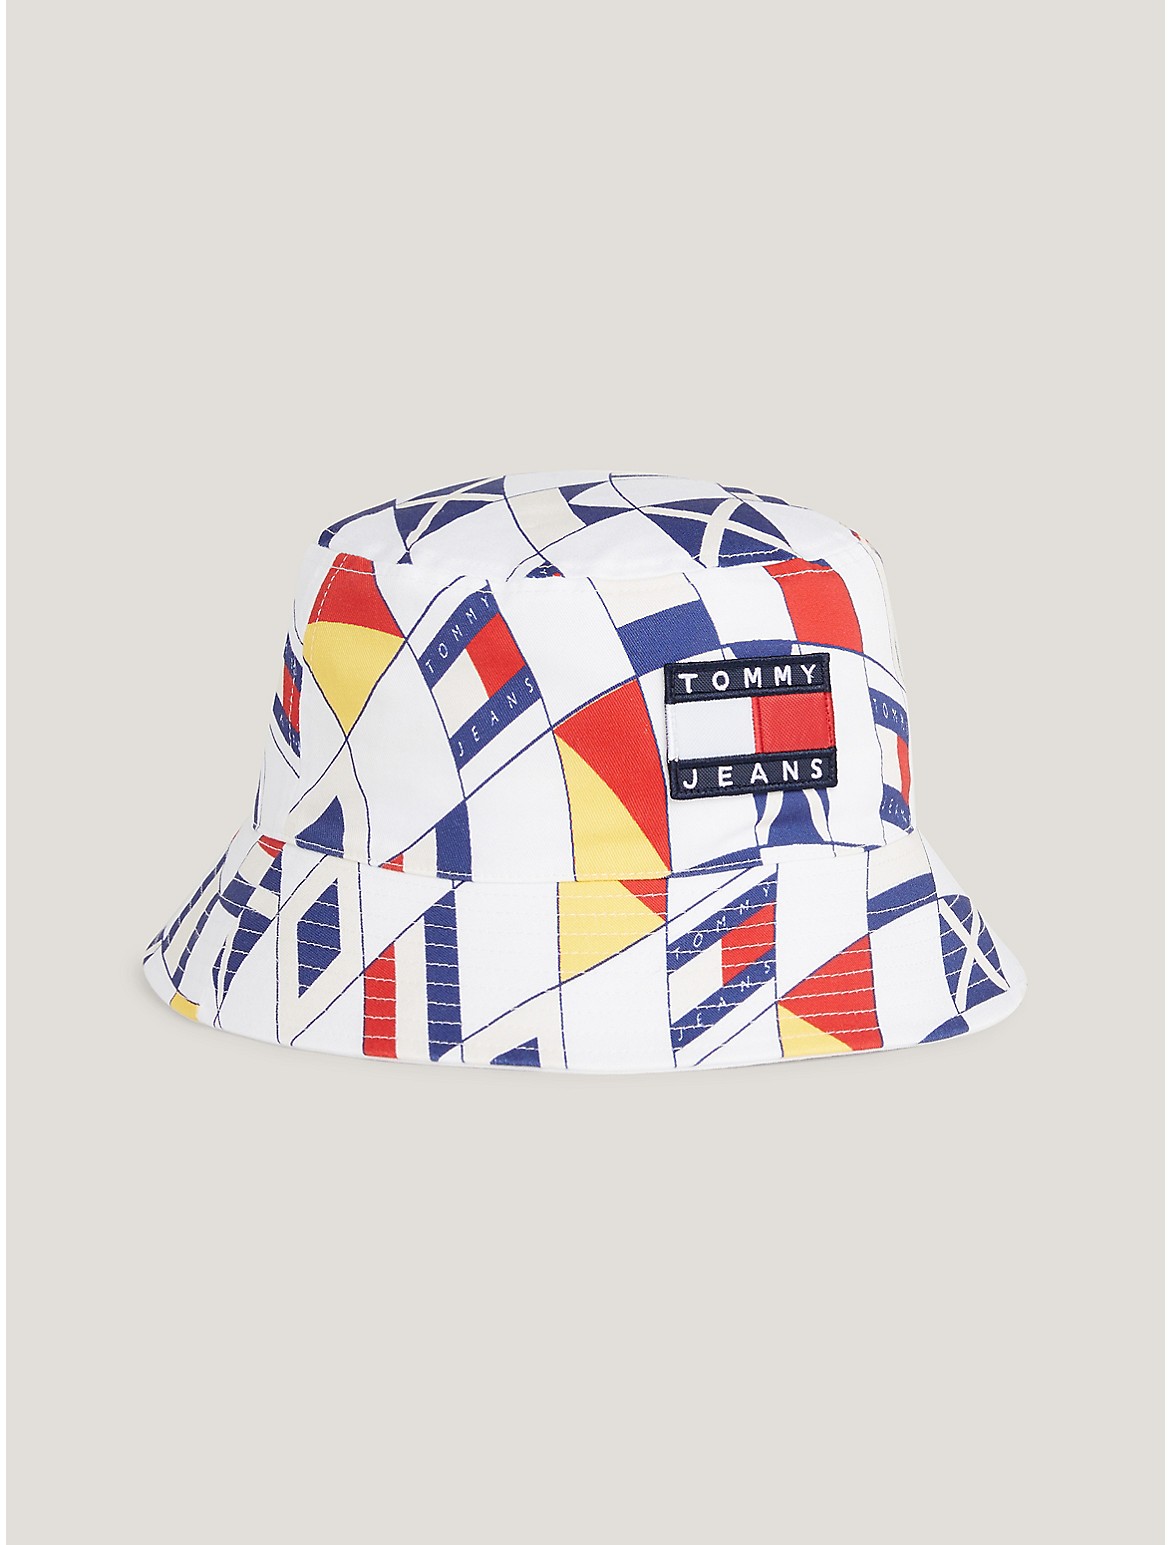 Tommy Hilfiger Men's TJ Flag Logo Nautical Bucket Hat - Multi